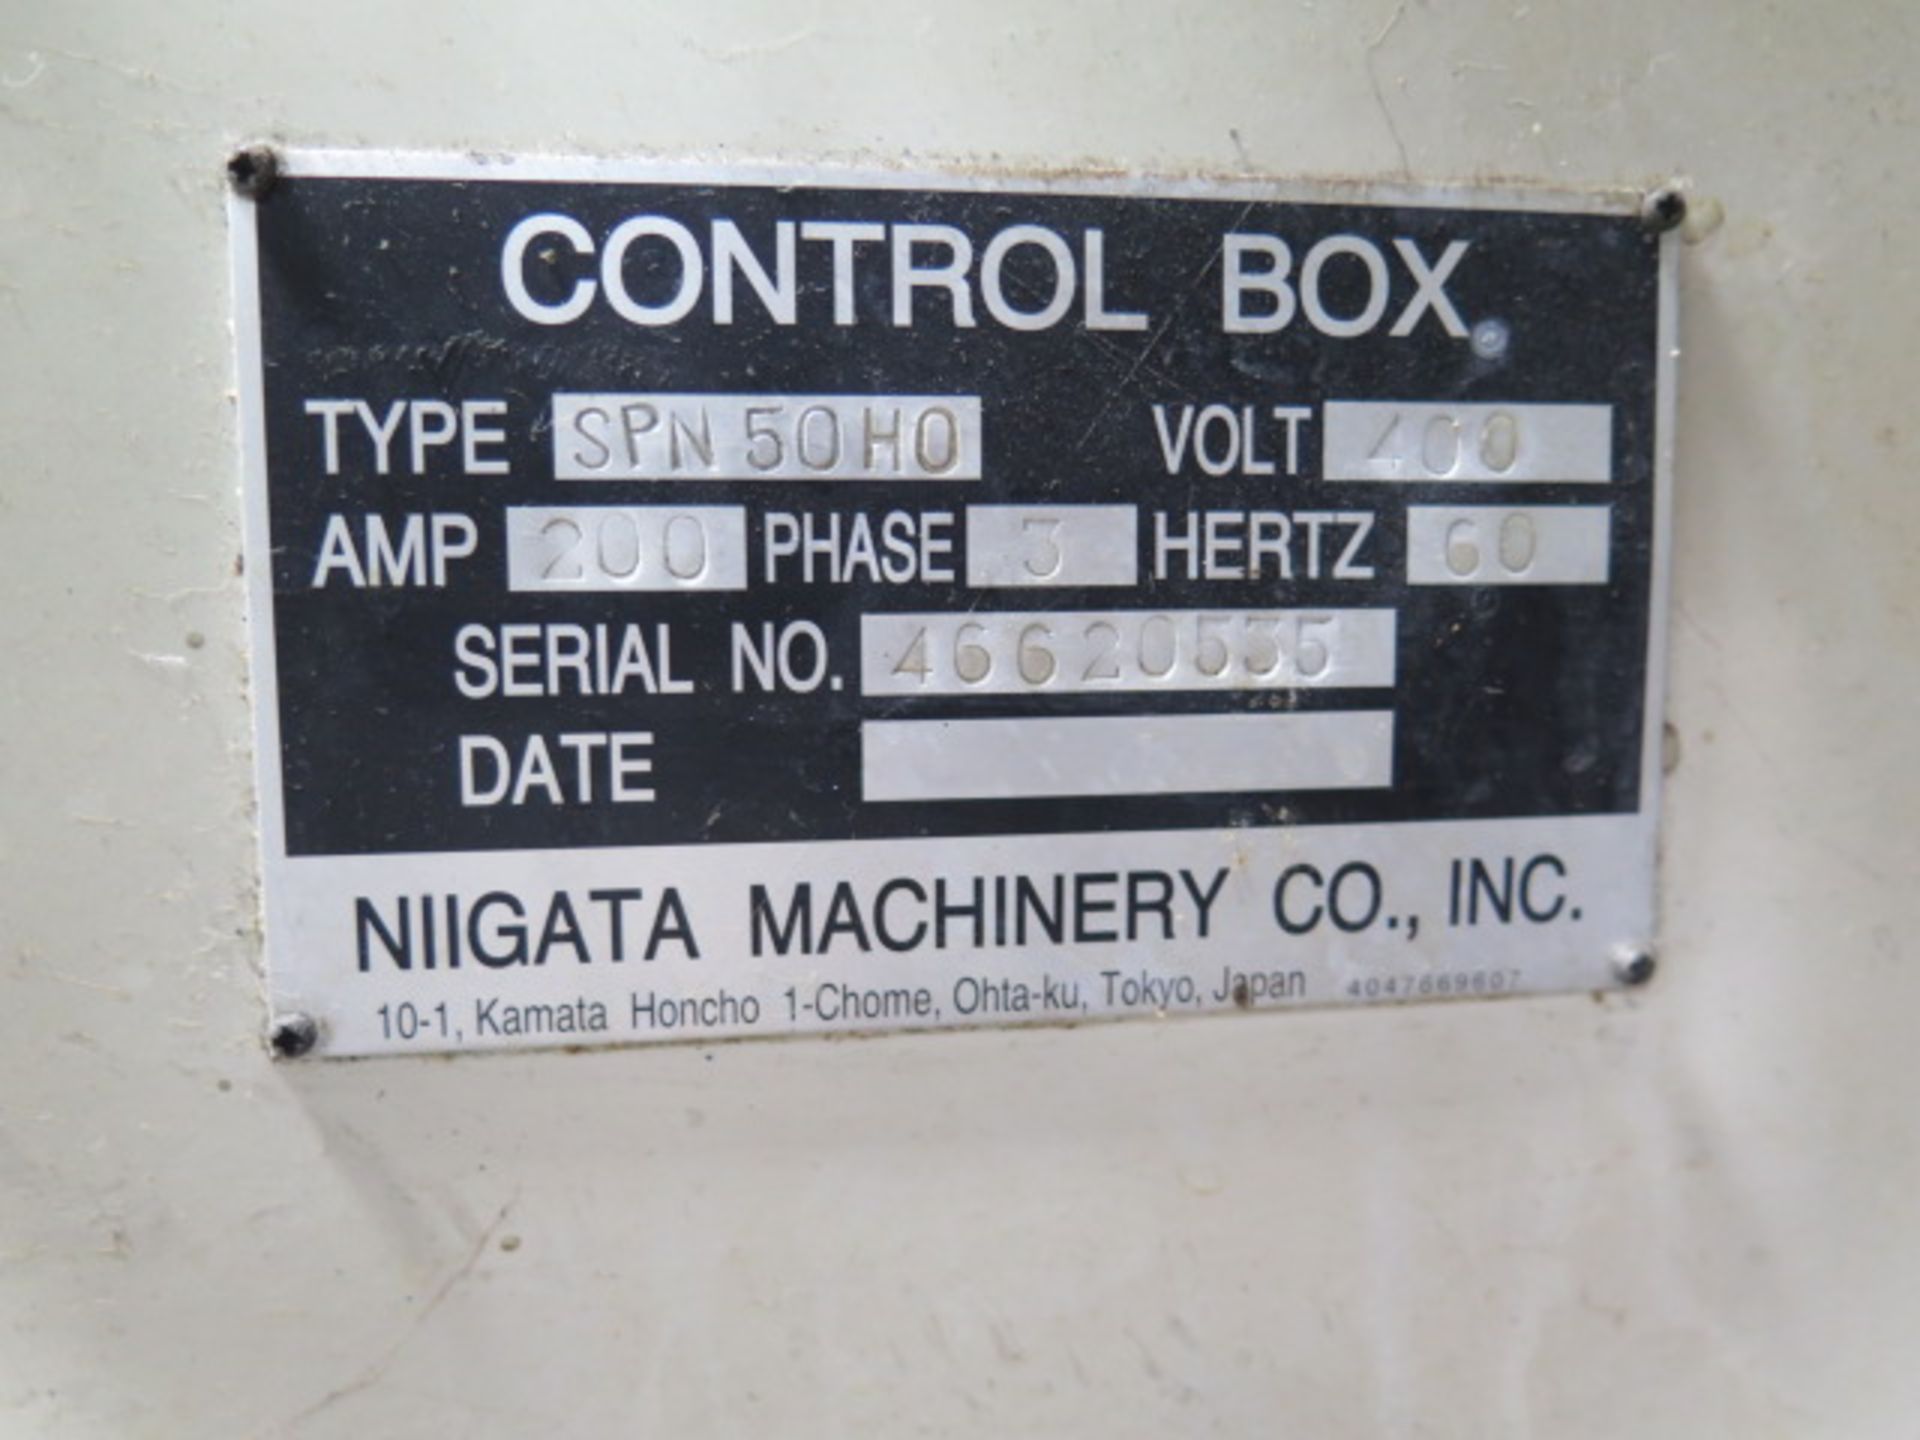 Nigata SPN50-H.O. 2-Pallet CNC HMC s/n 46620535 w/ Fanuc Series 16i-M, SOLD AS IS - Image 21 of 21